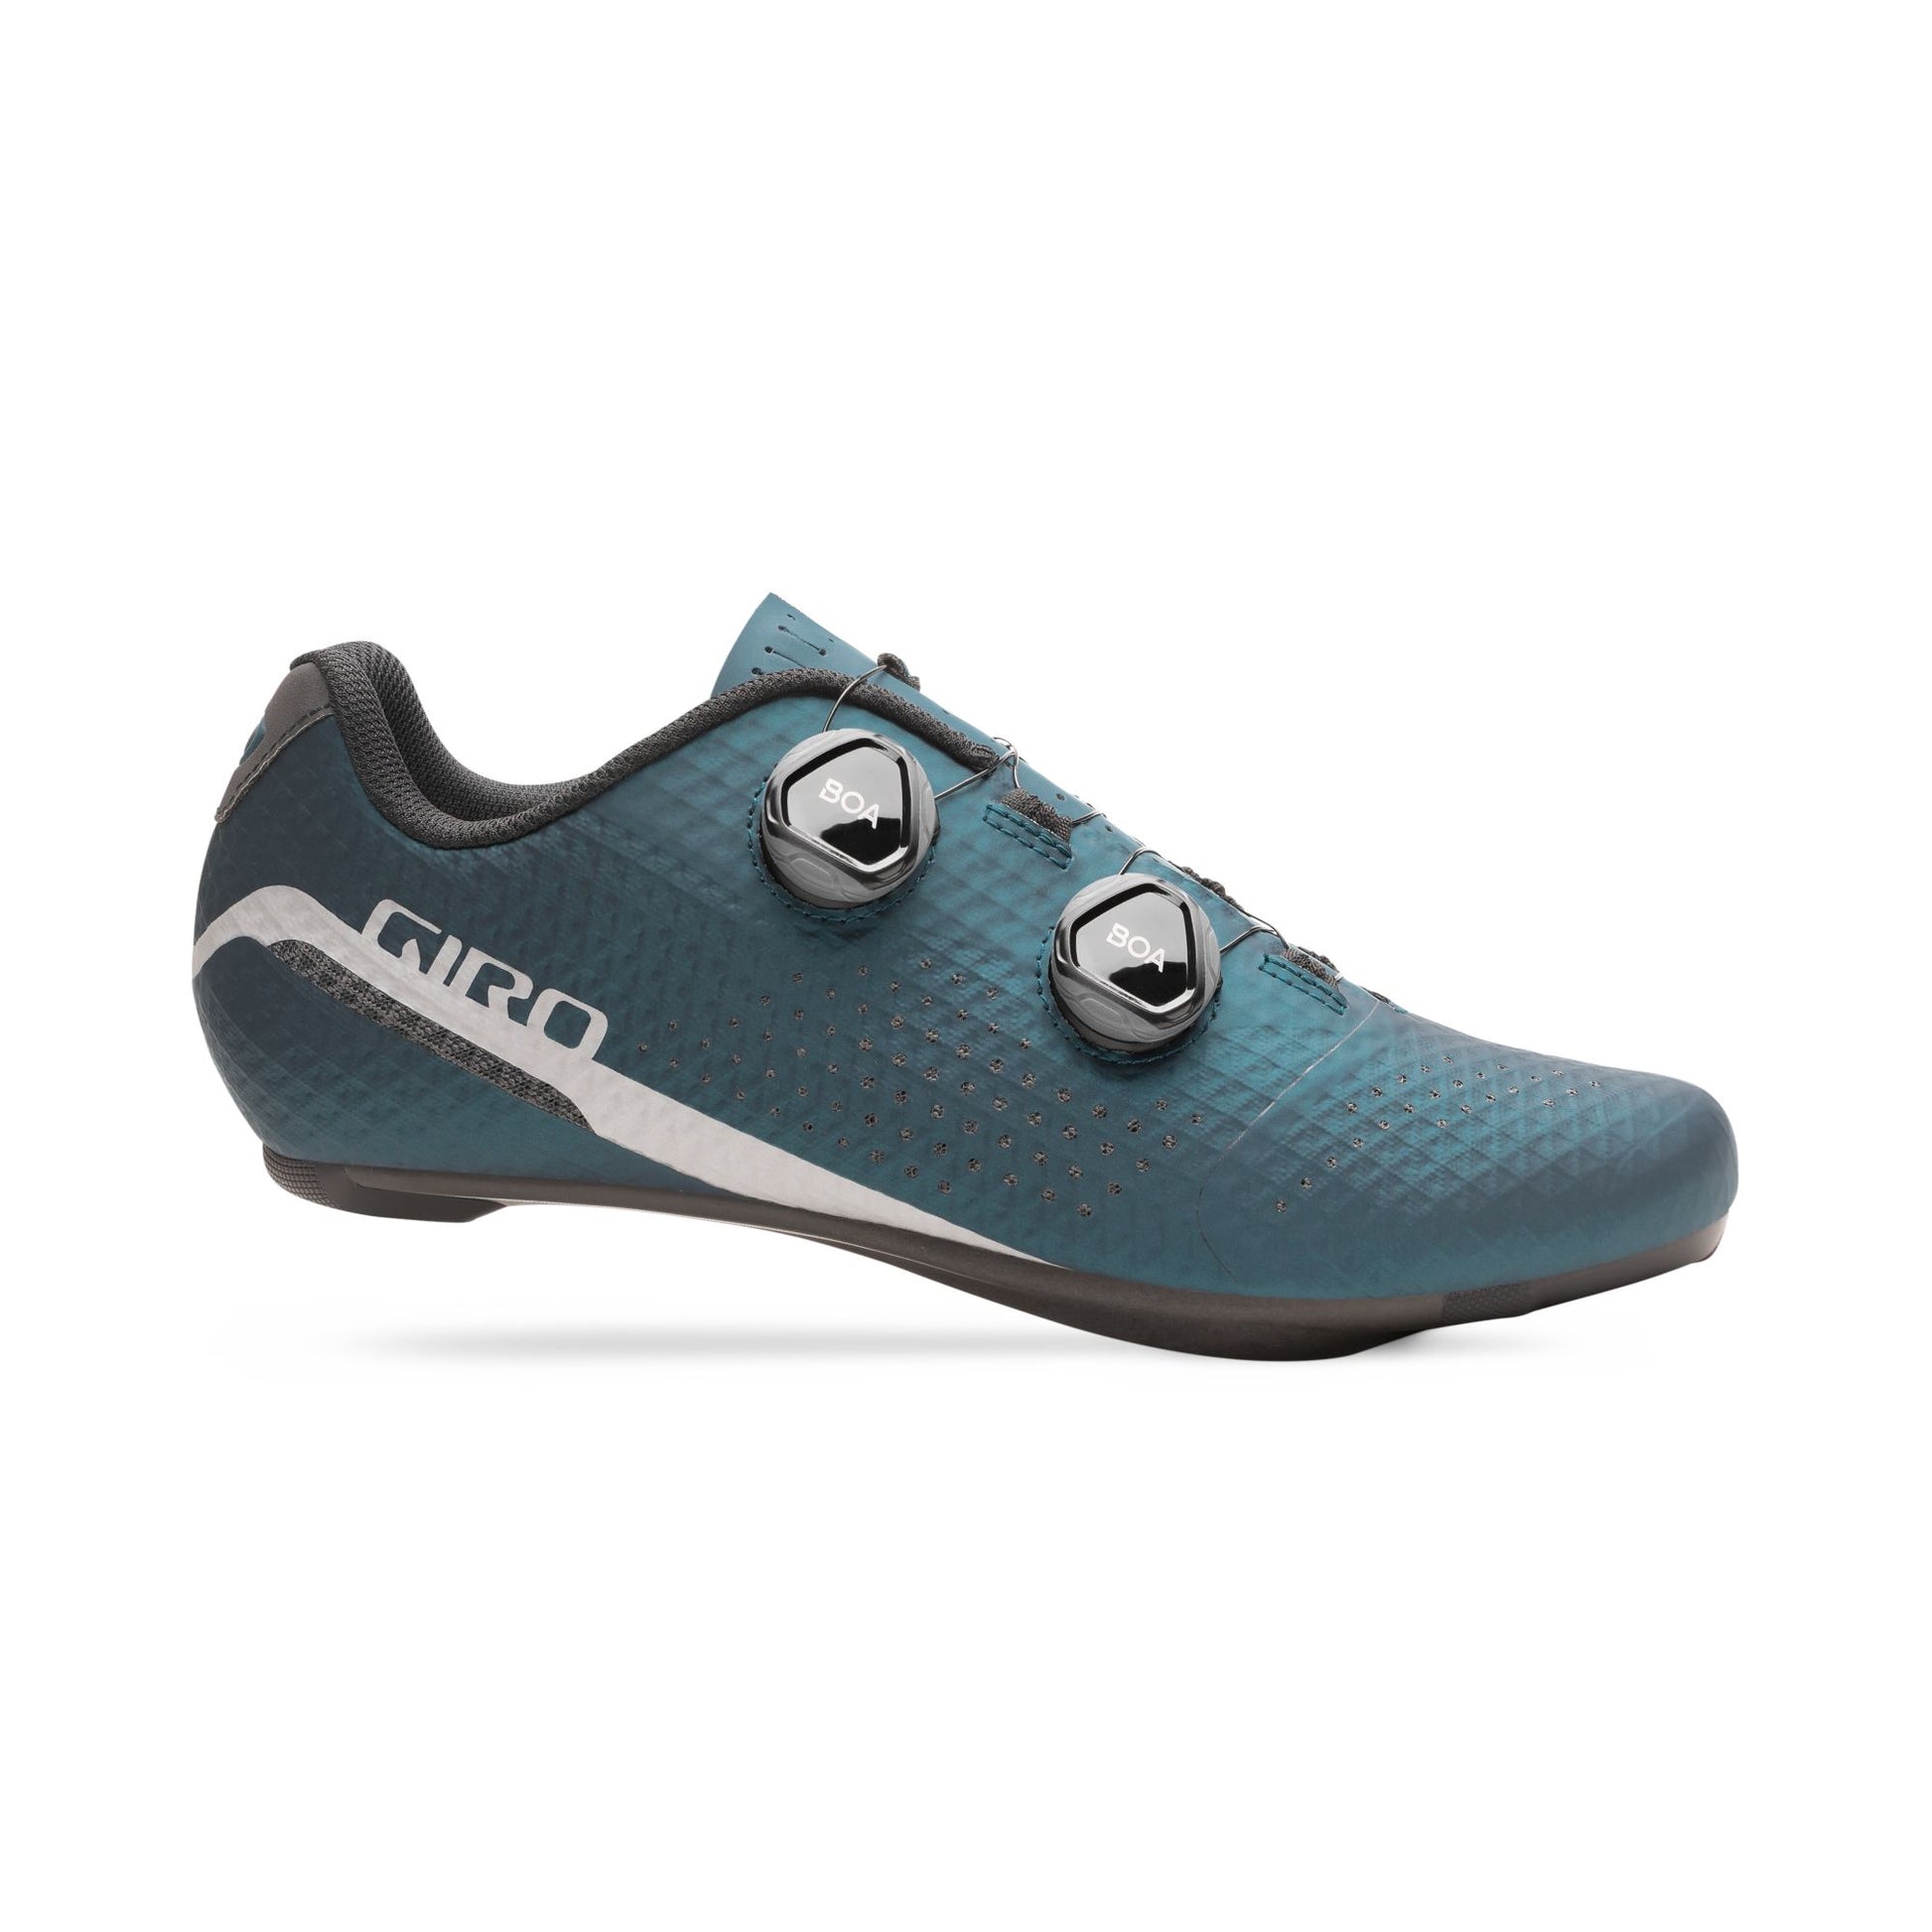 Giro Men's Regime Shoe Harbor Blue Anodized Bike Shoes